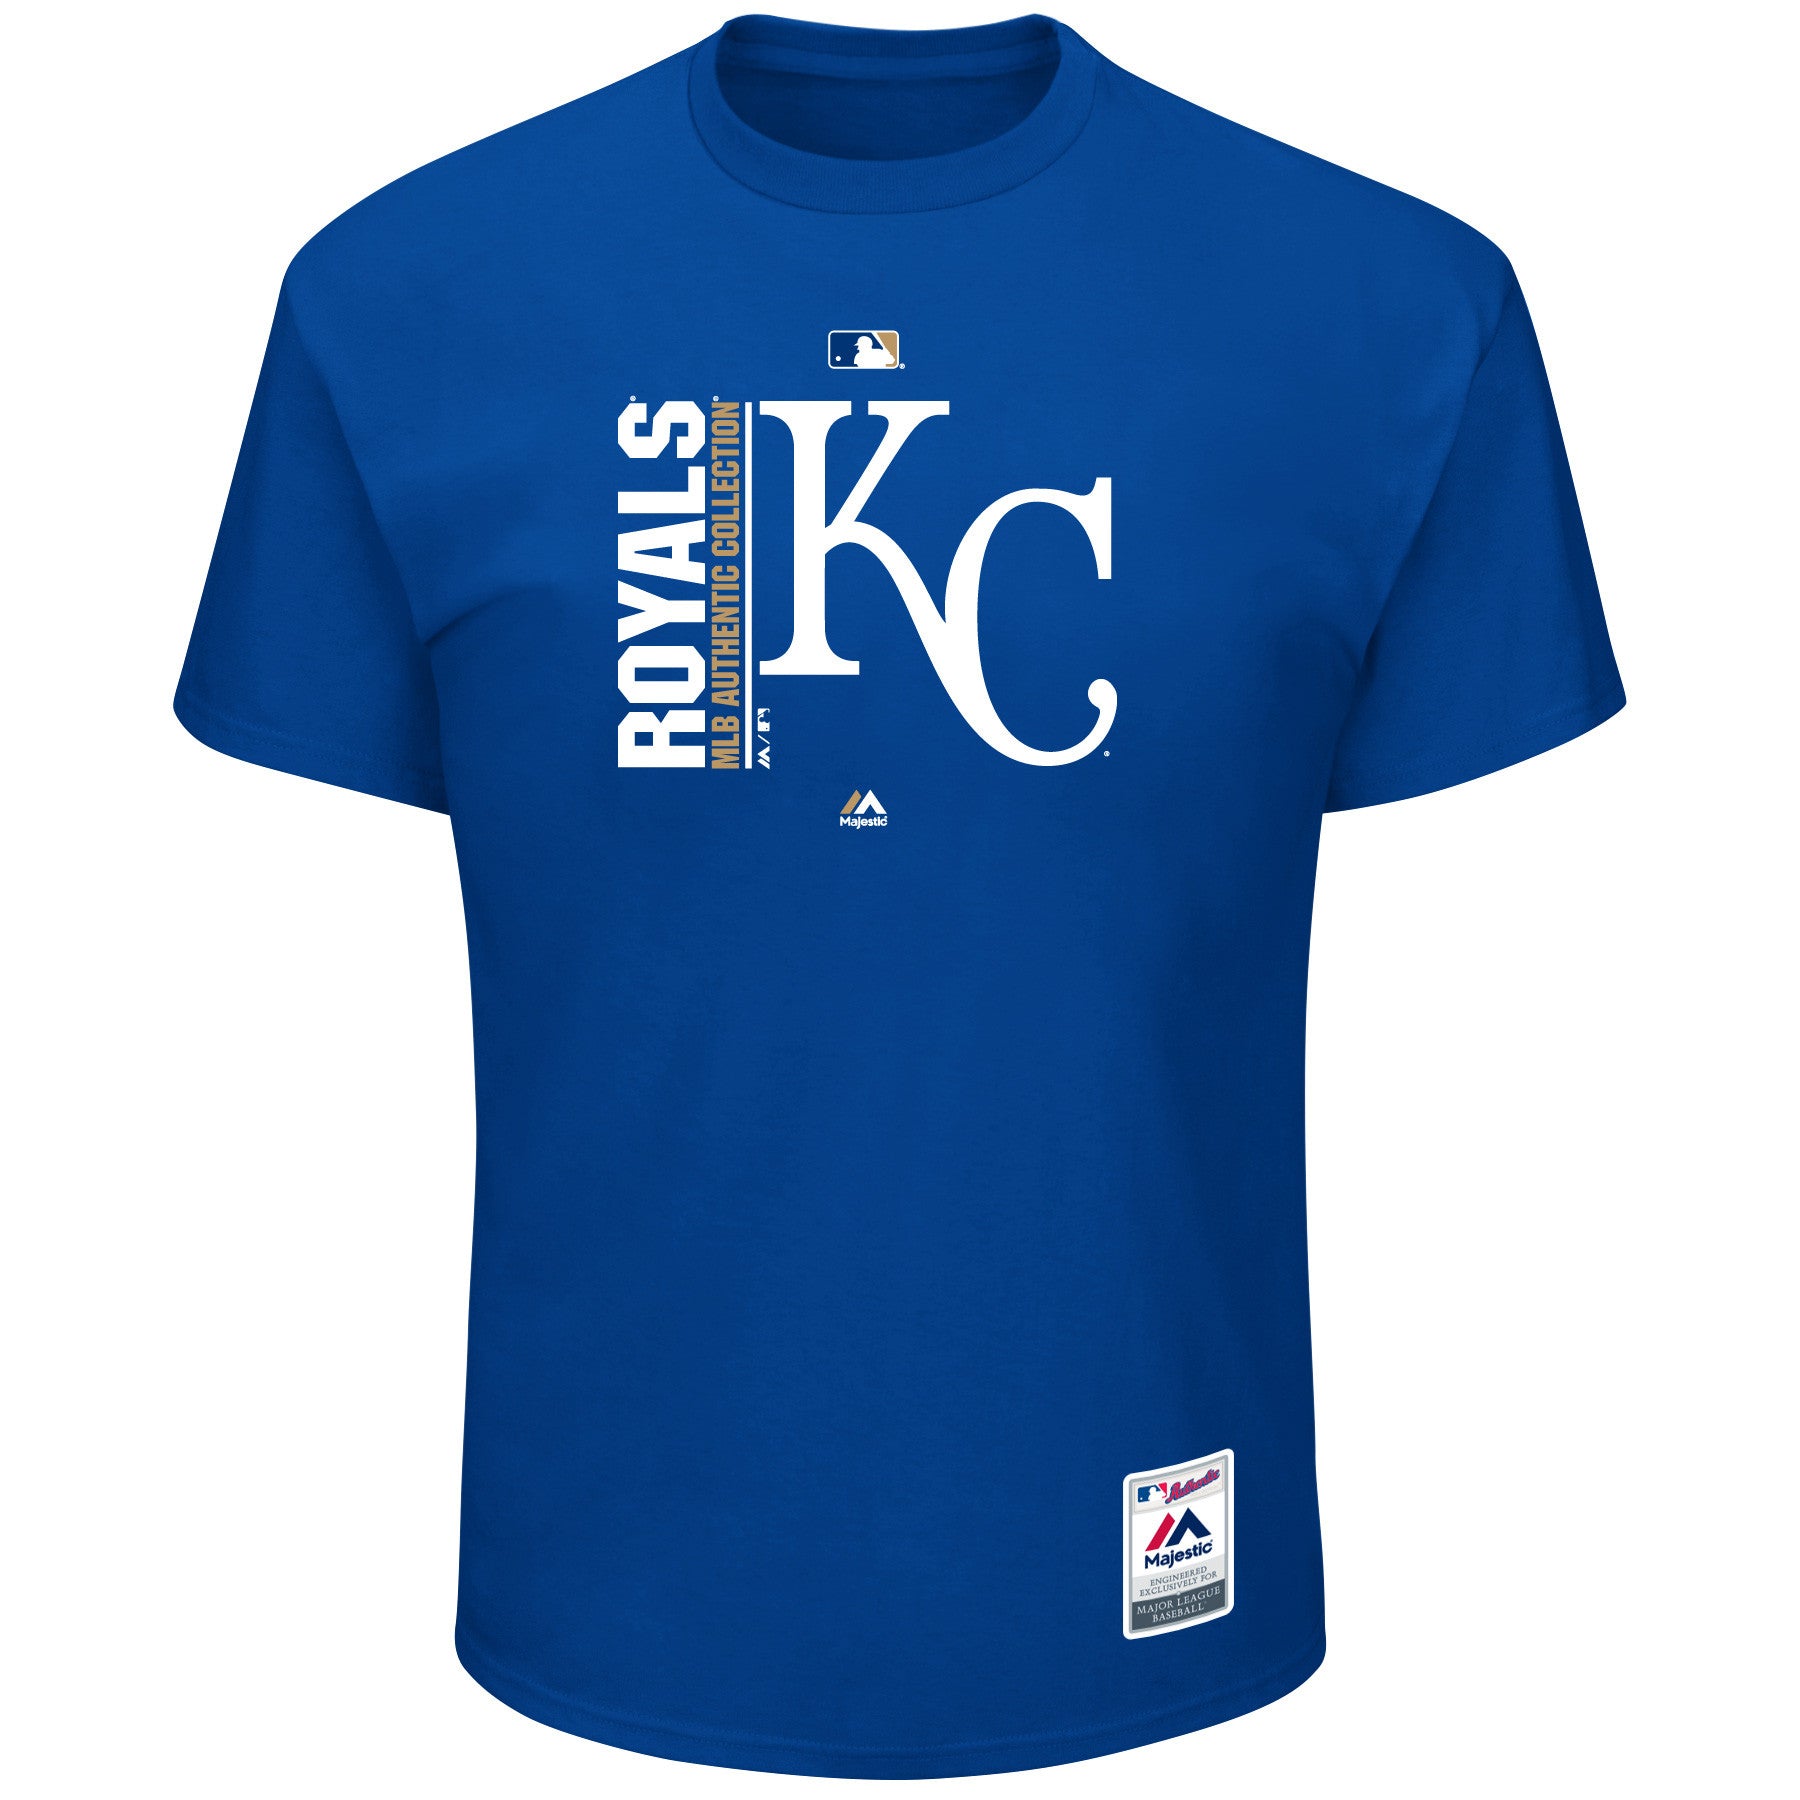 Official Kansas City Royals Gear, Royals Jerseys, Store, Royals